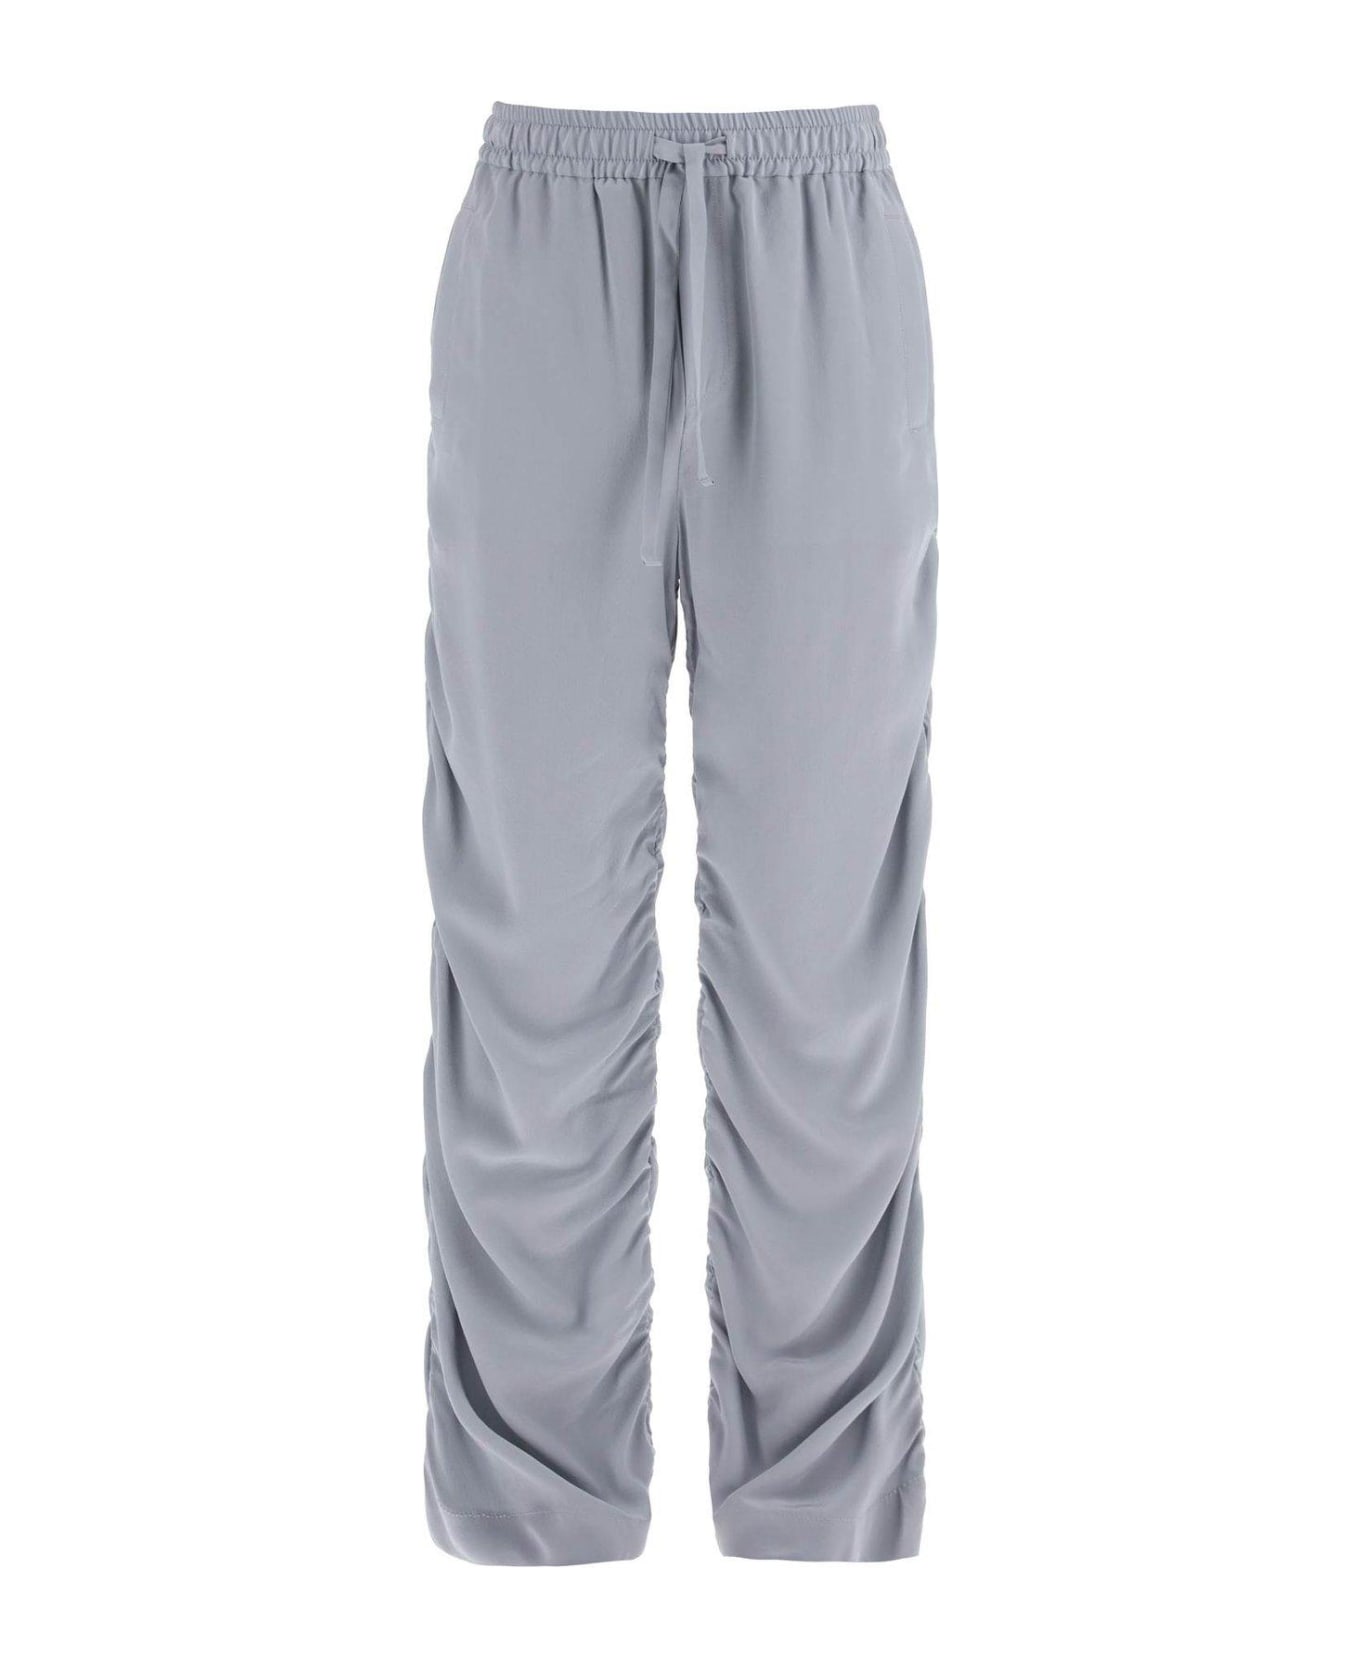 Dolce & Gabbana Wide-leg Drawstring Track Pants - GRIGIO CHIARO 6 (Grey)